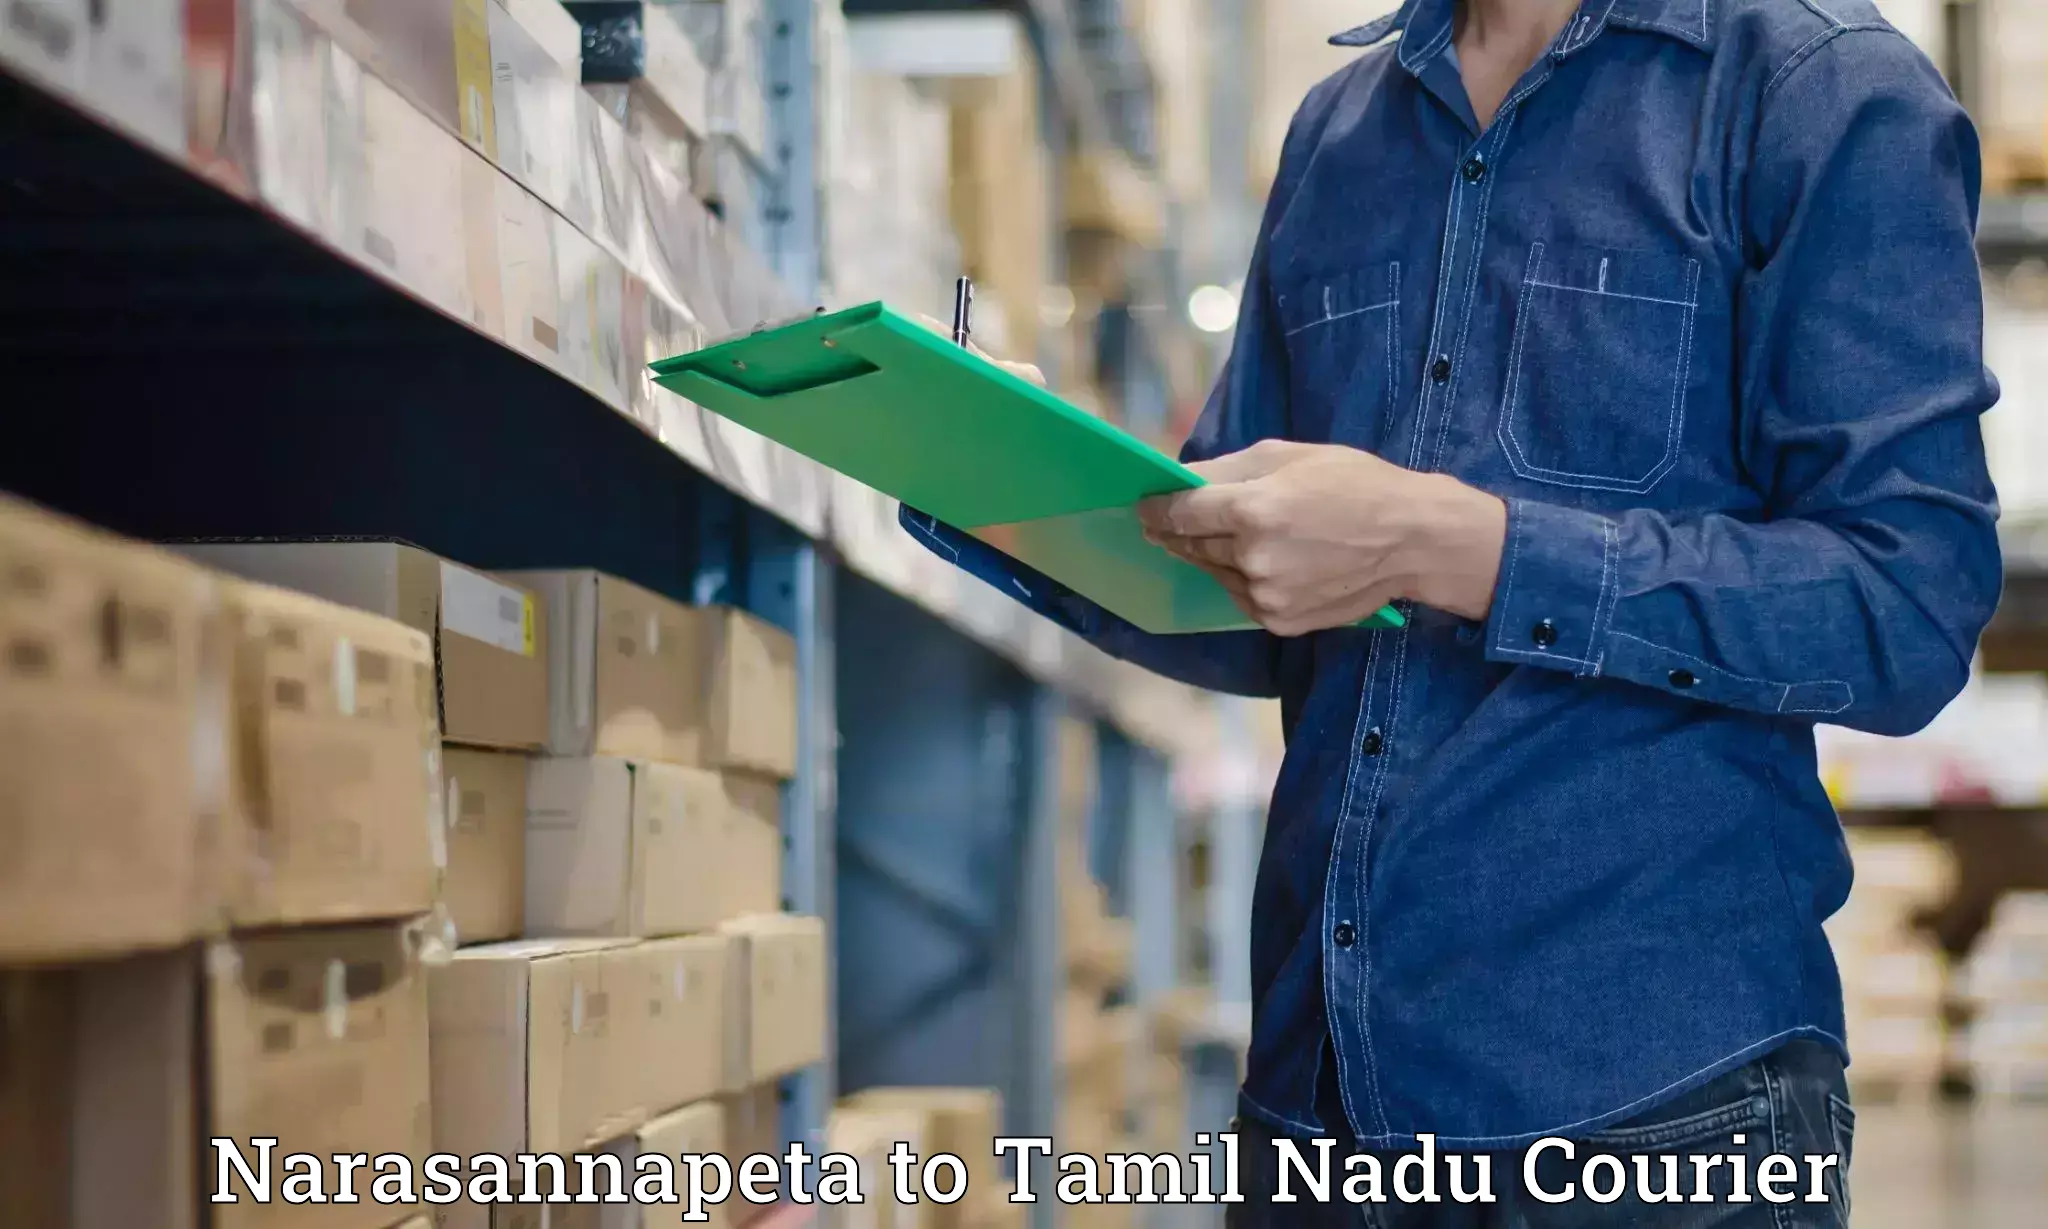 Smart shipping technology Narasannapeta to Sivakasi